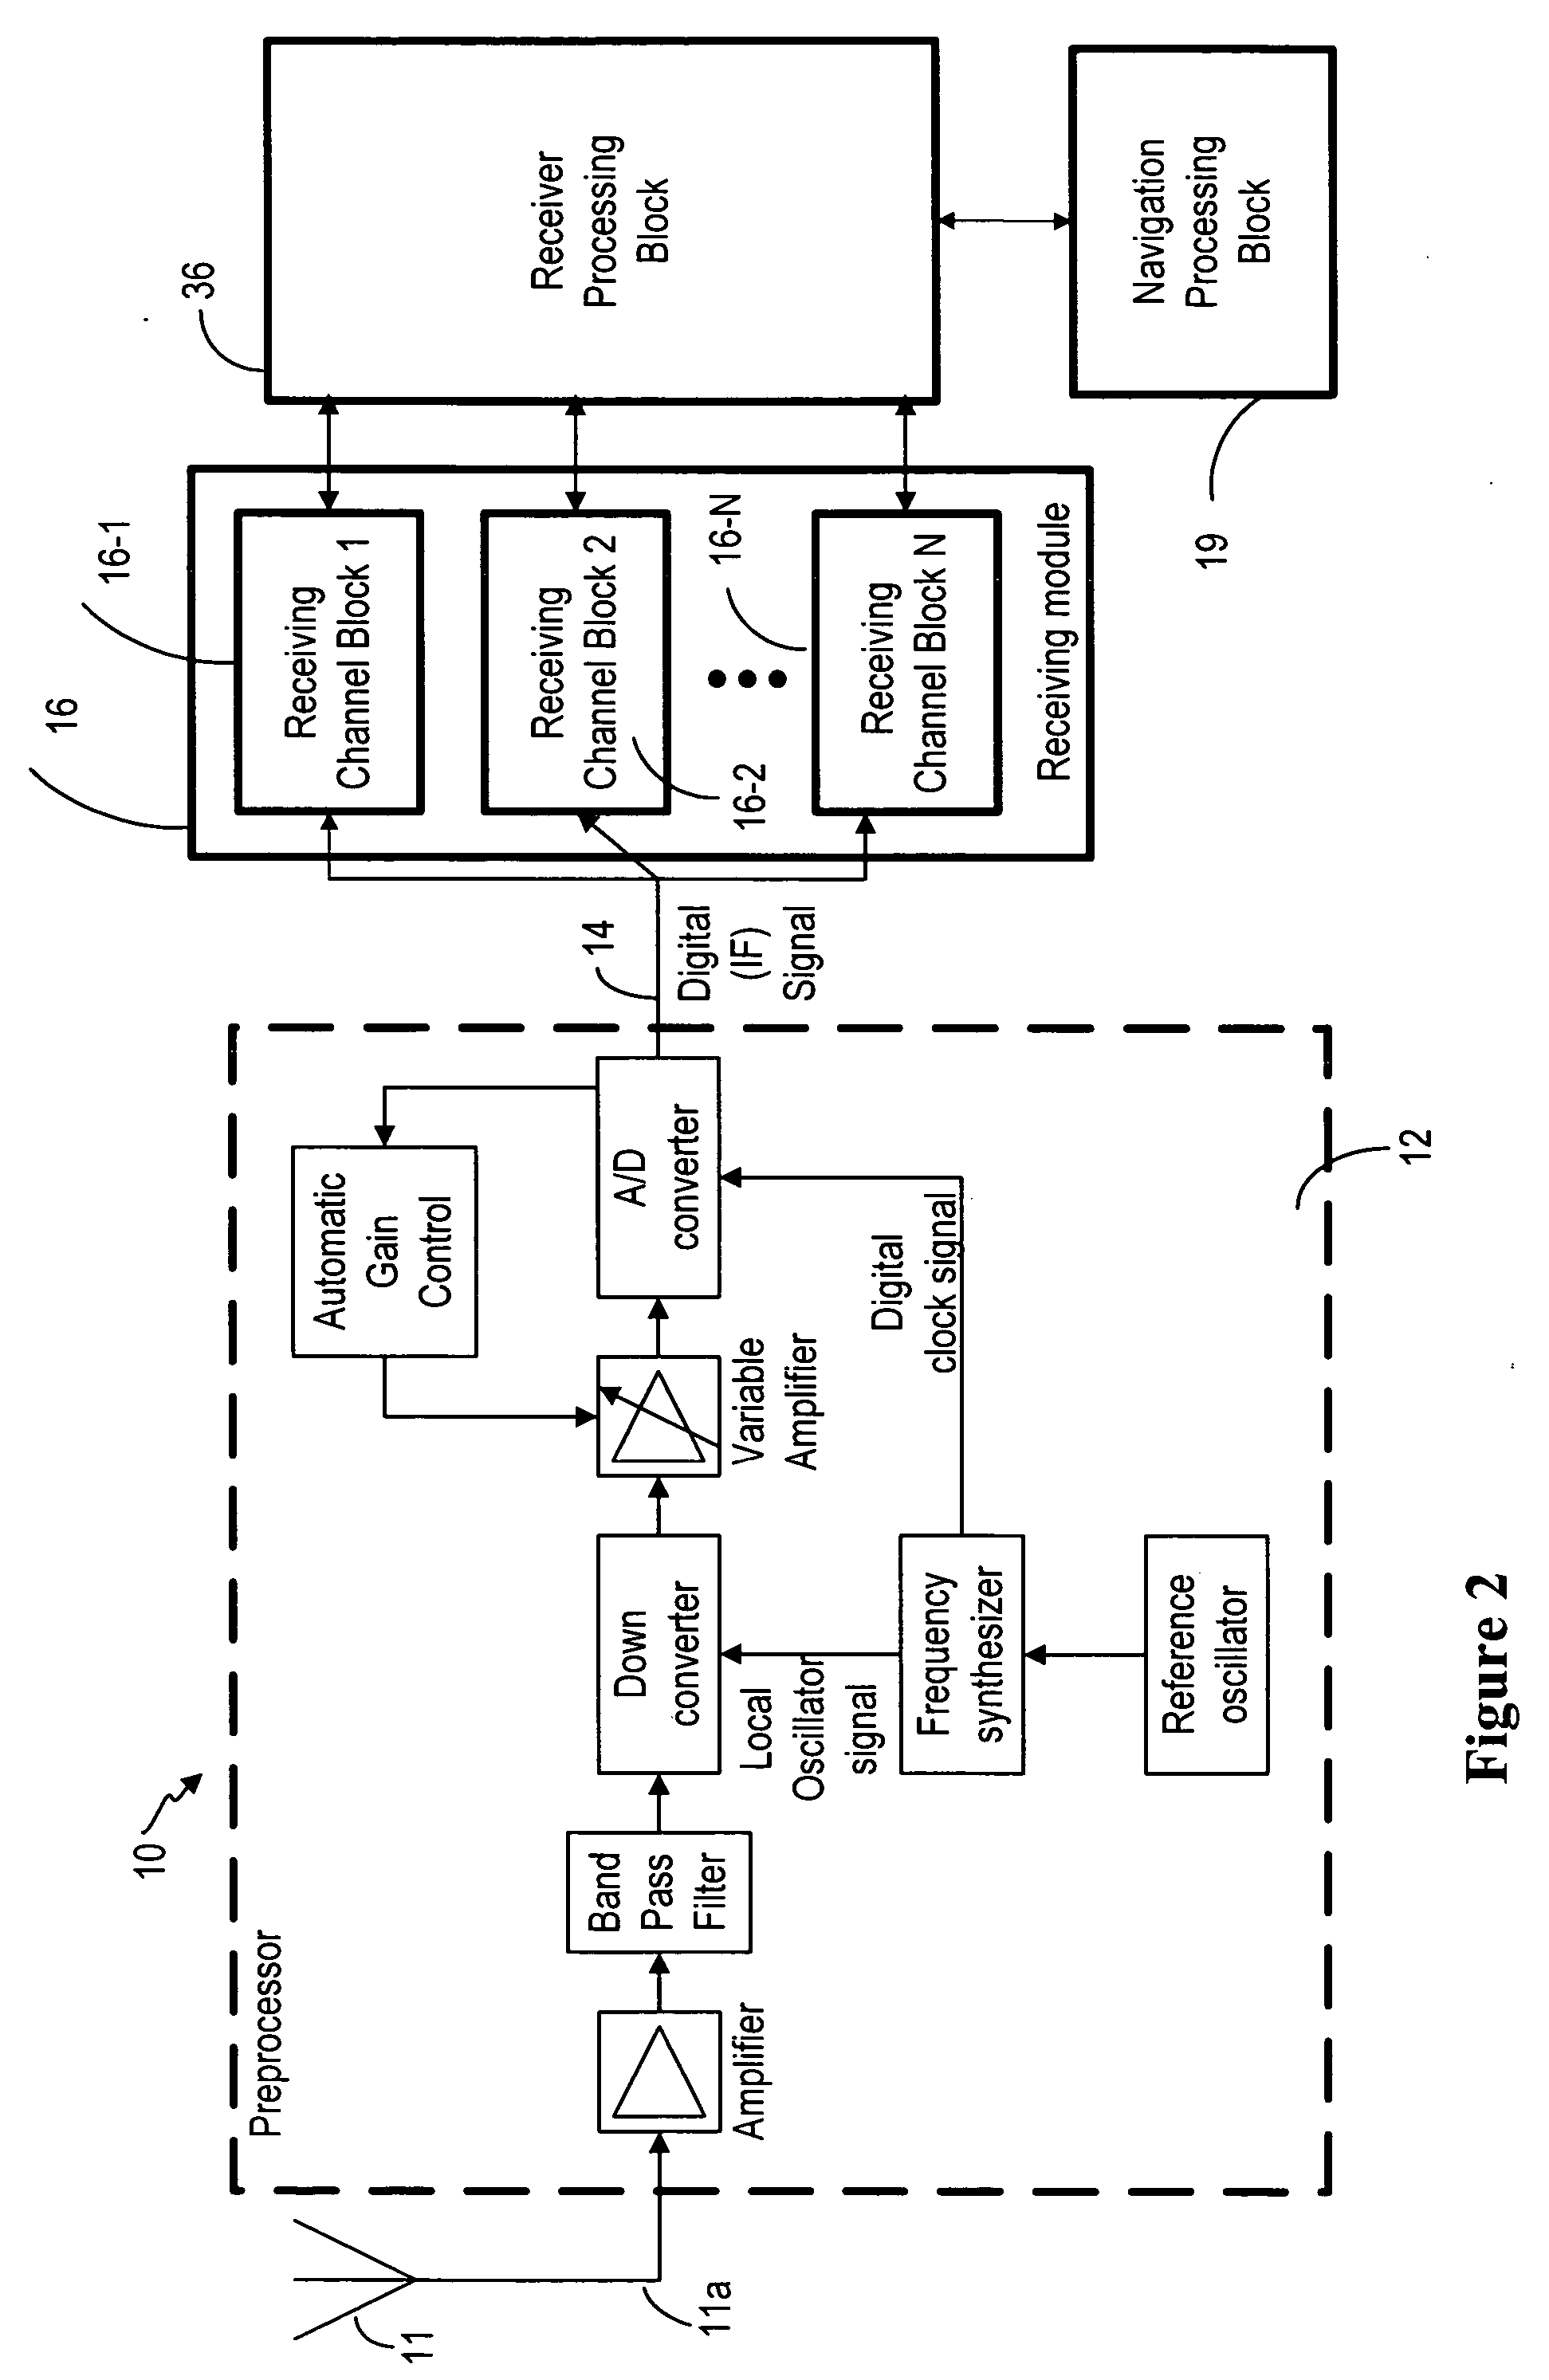 Multi-path detection method for CDMA receivers